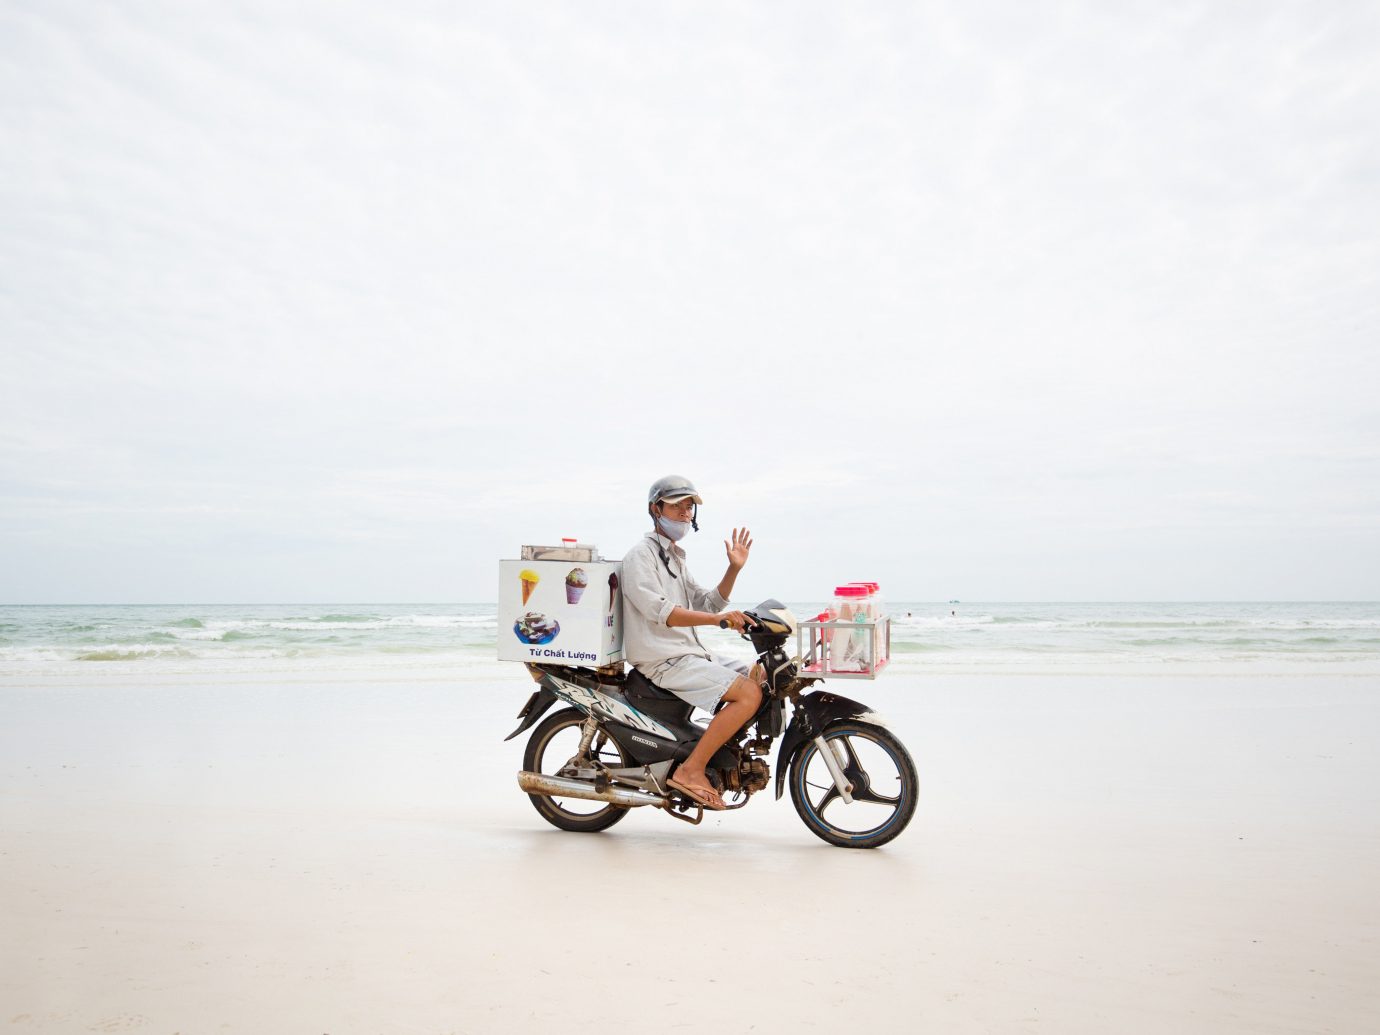 sky outdoor water Beach vehicle Sea Coast sand bicycle motorcycle shore sandy